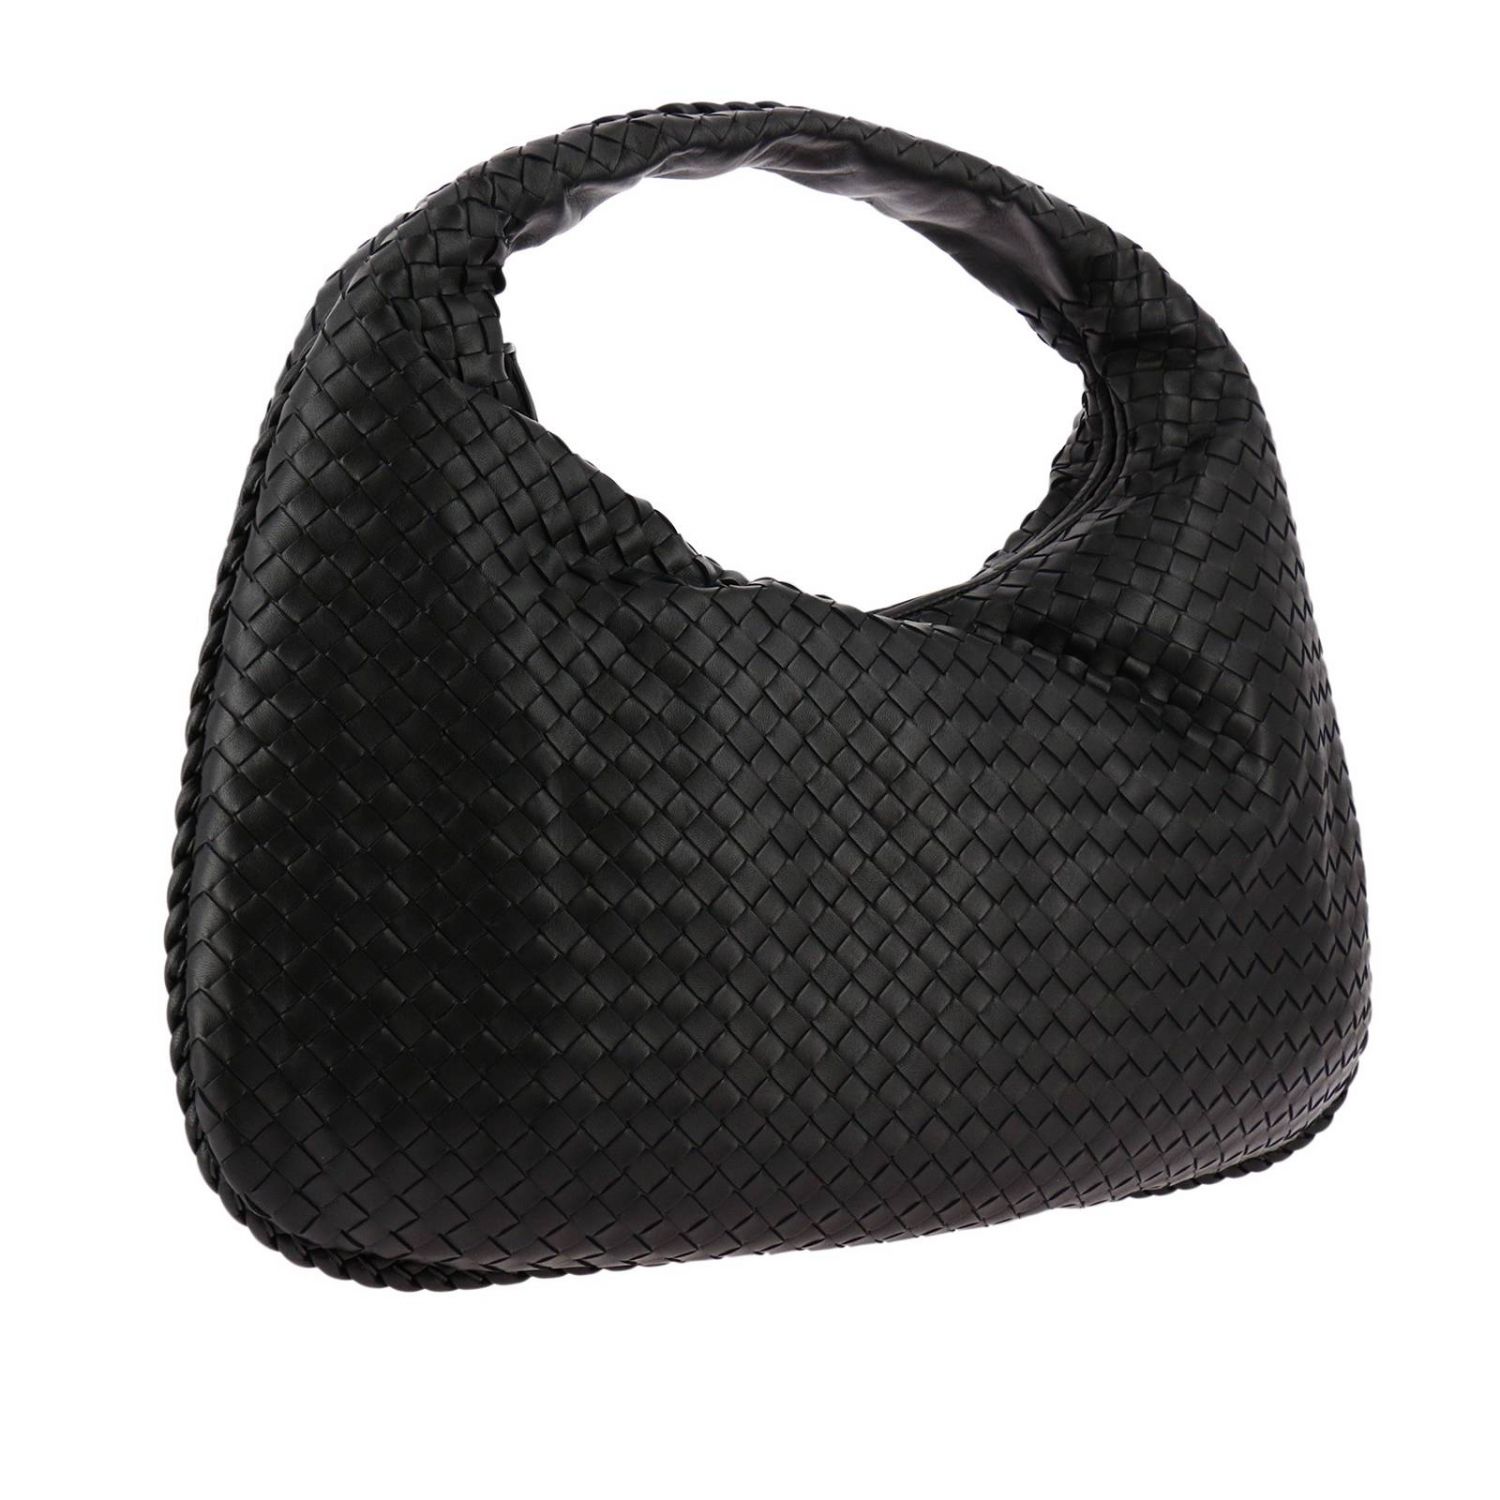 Bottega Veneta Hobo bag Veneta Large in leather with woven pattern ...